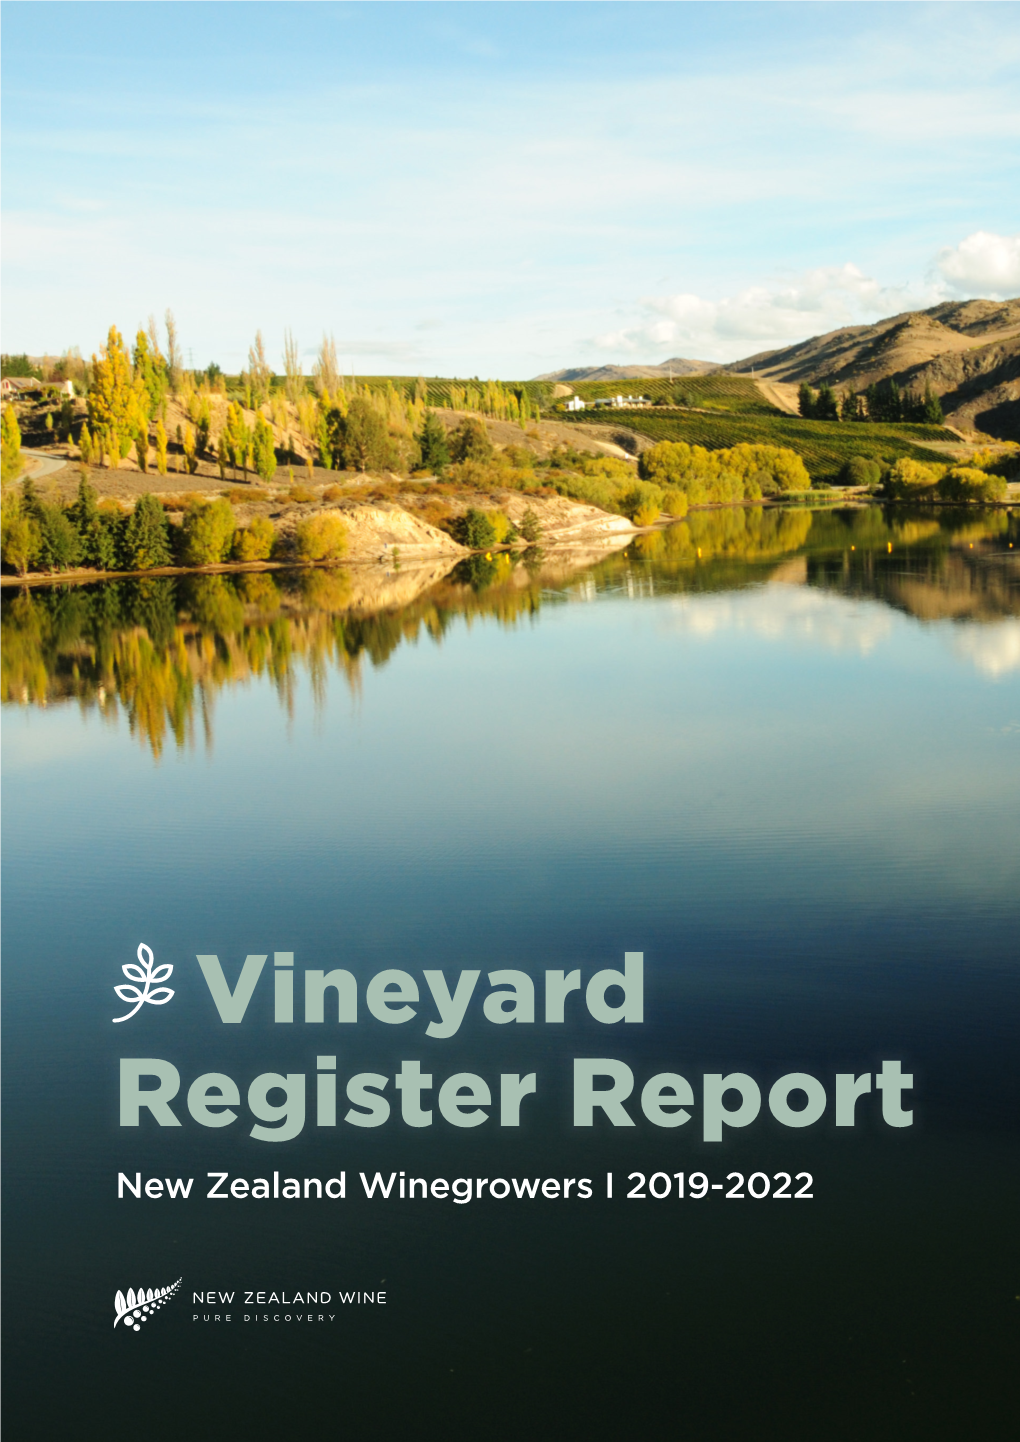 Vineyard Register Report New Zealand Winegrowers I 2019-2022